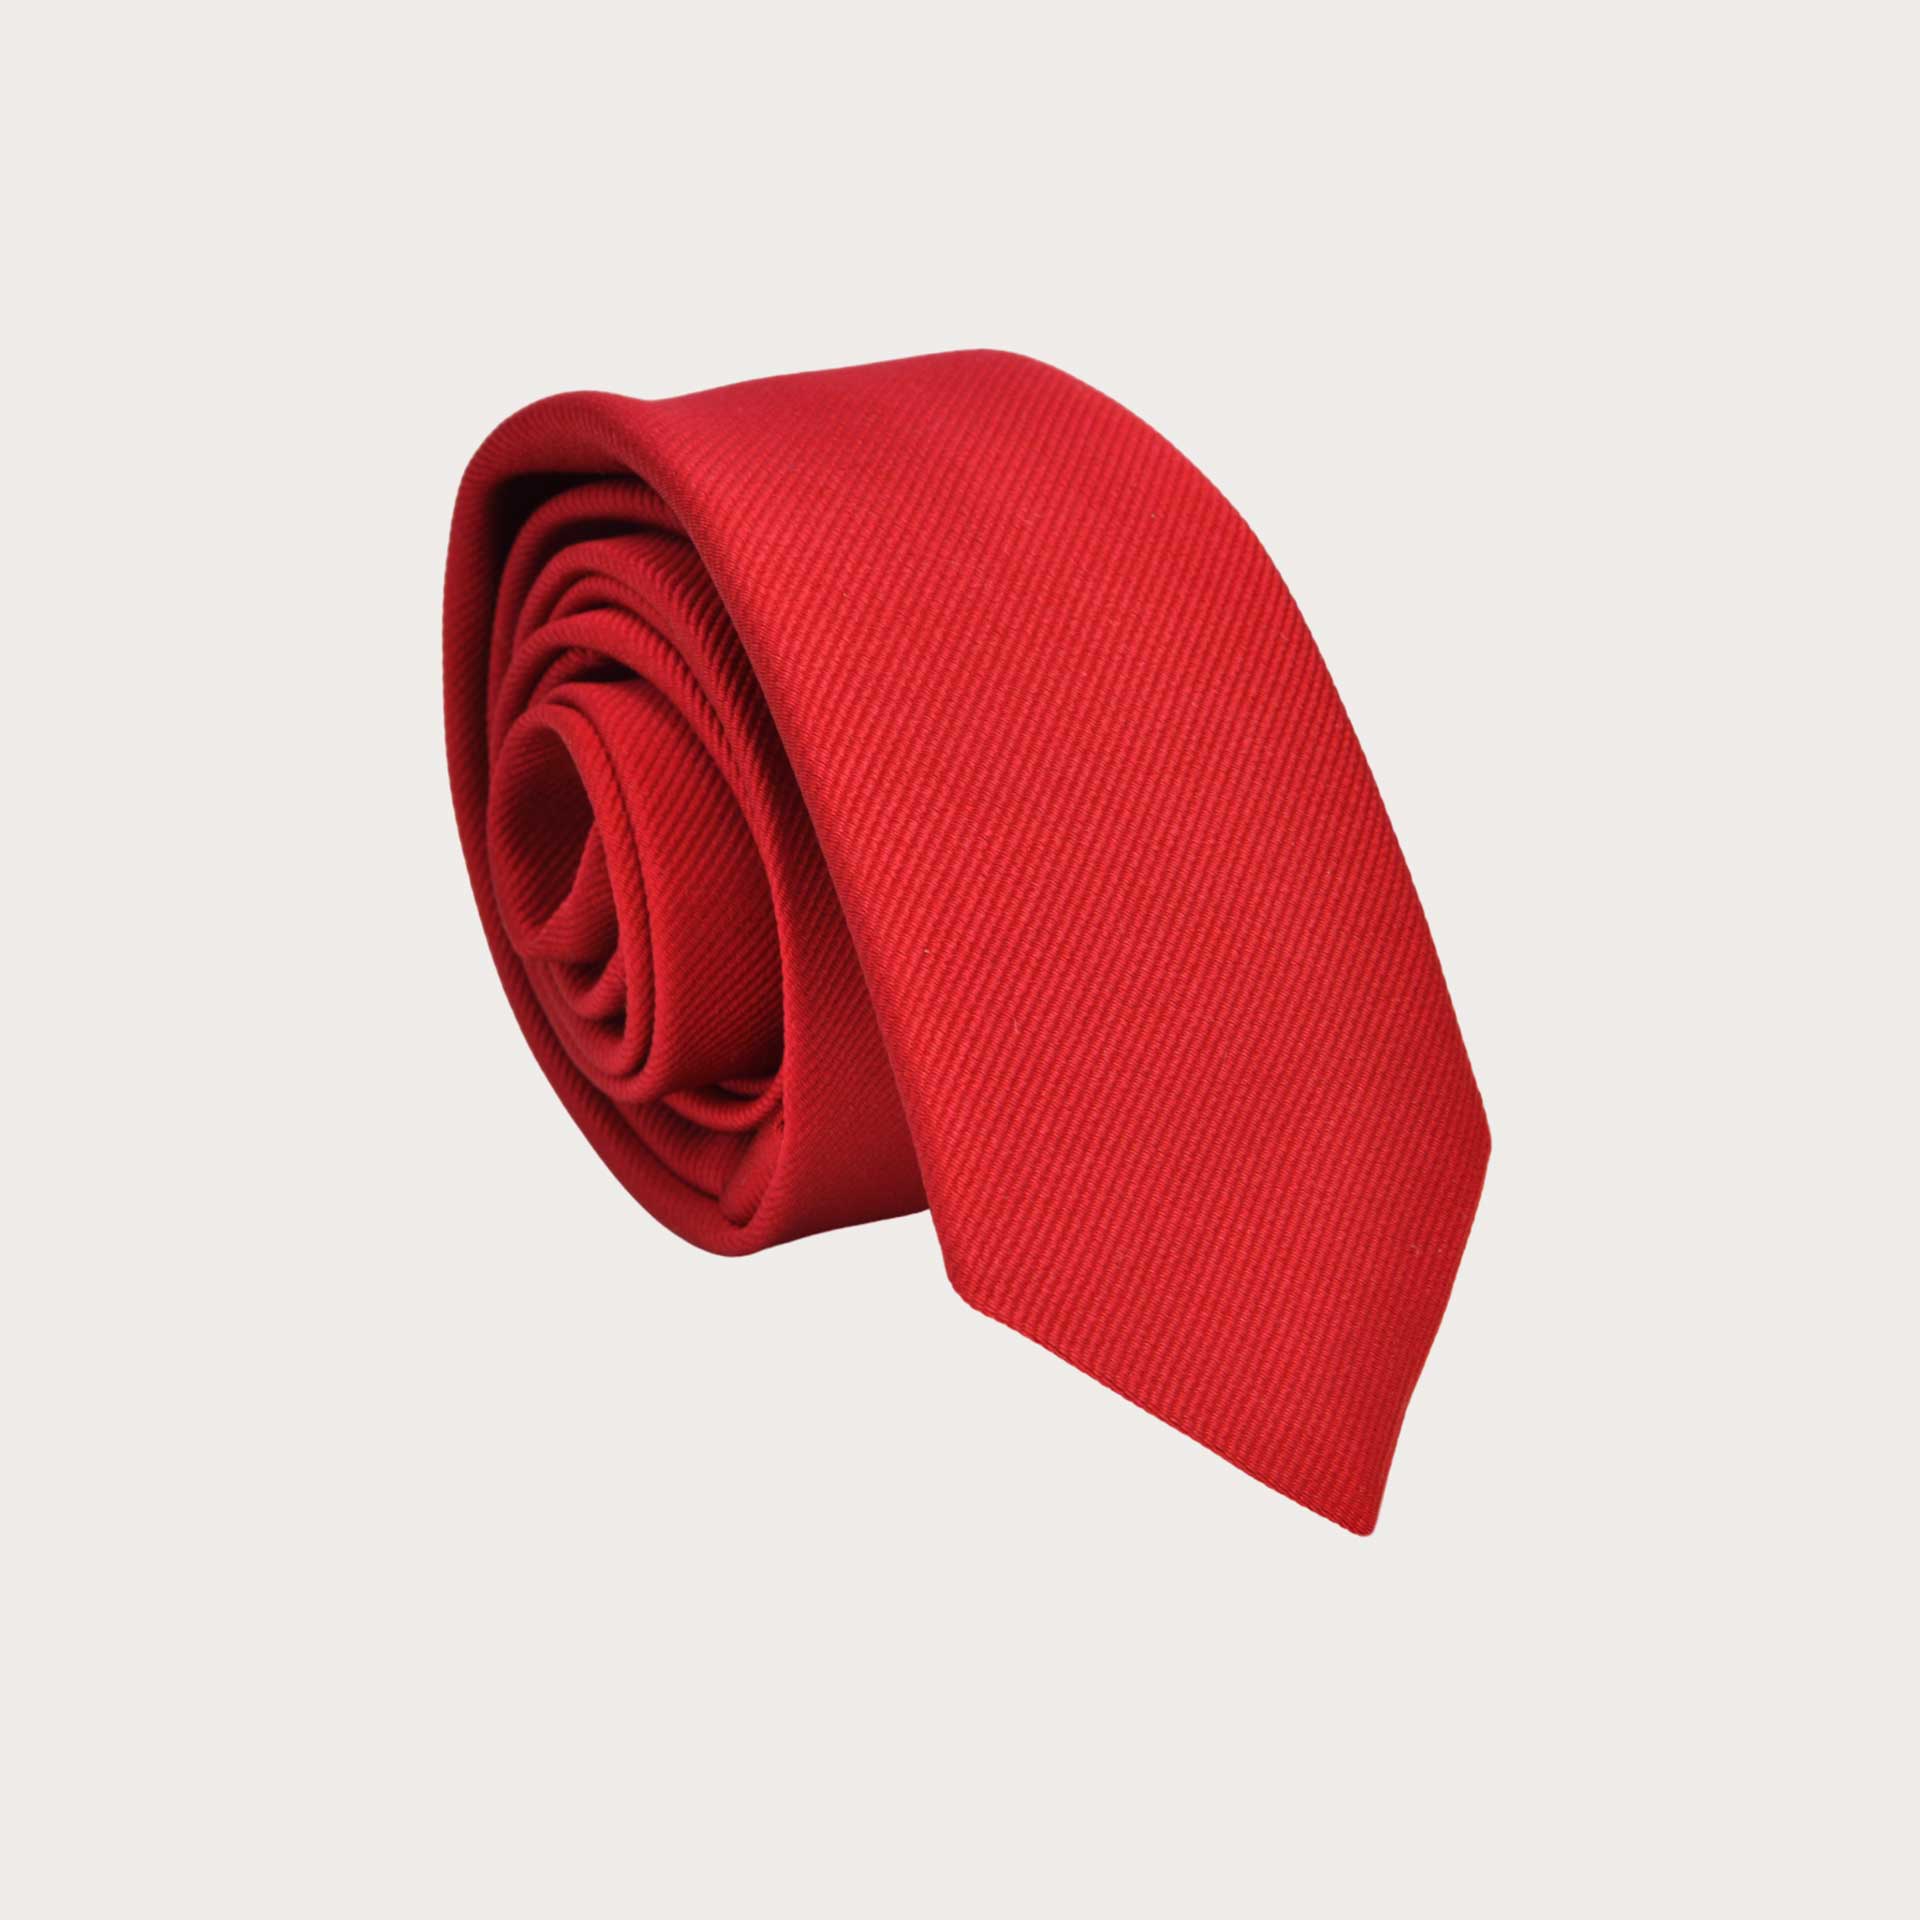 Cravatta stretta rossa in seta